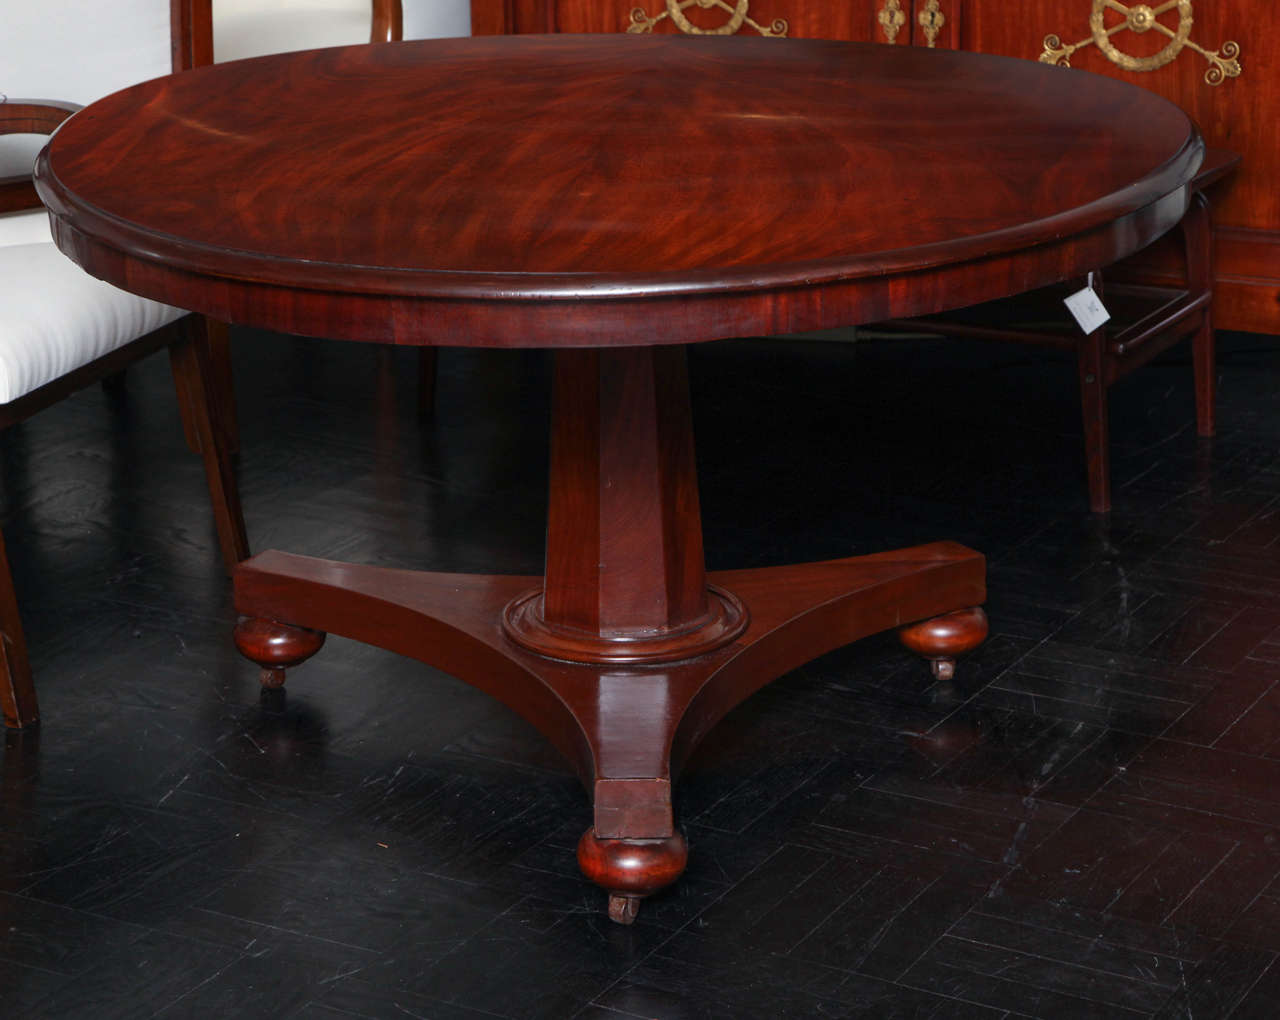 Early 19th century mahogany pedestal table, tripod base, bun feet.